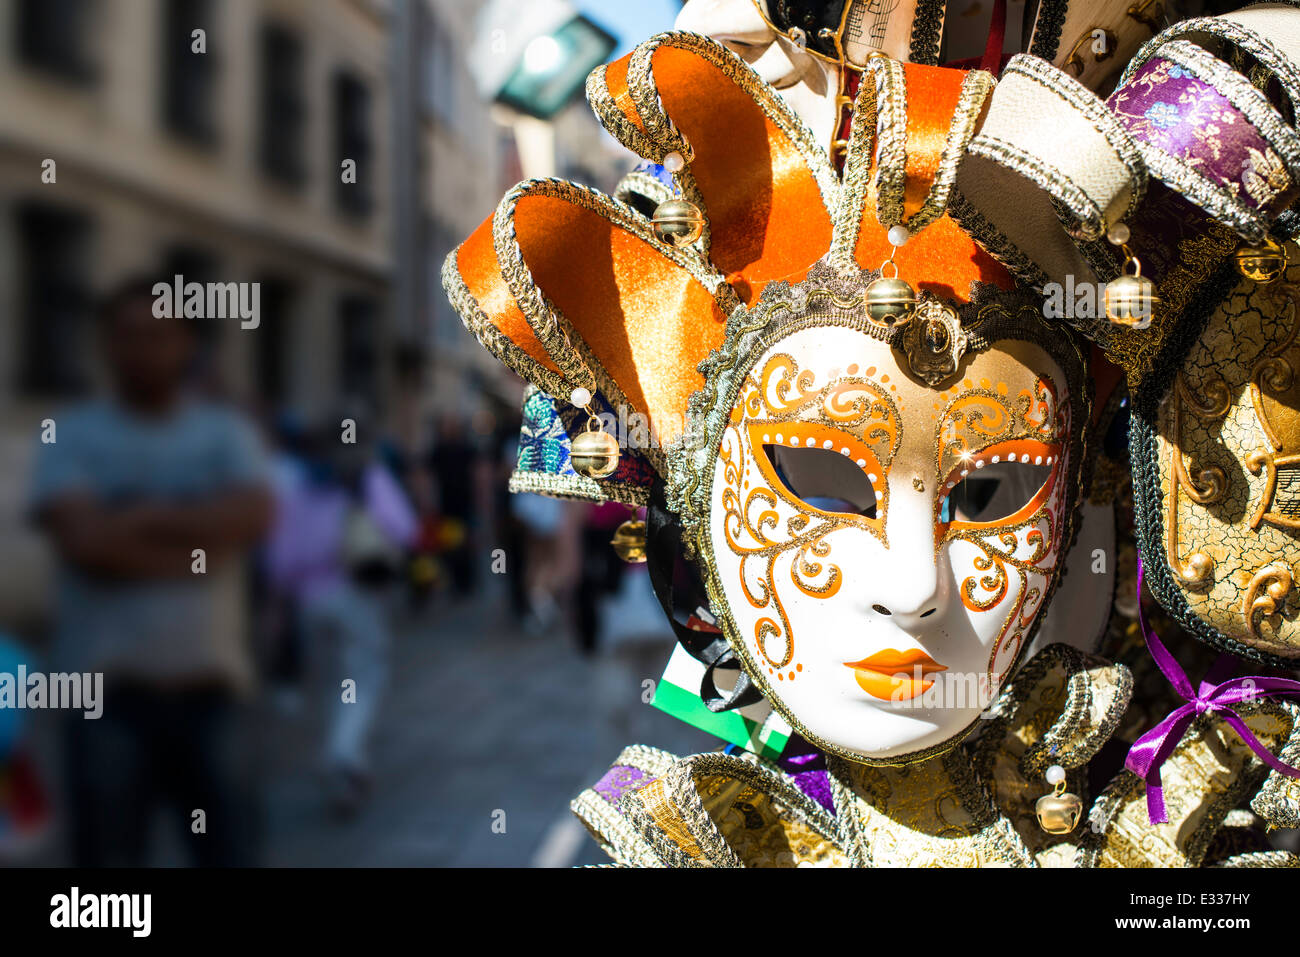 Venetian Carnival Mask on Wall display Stock Photo - Alamy